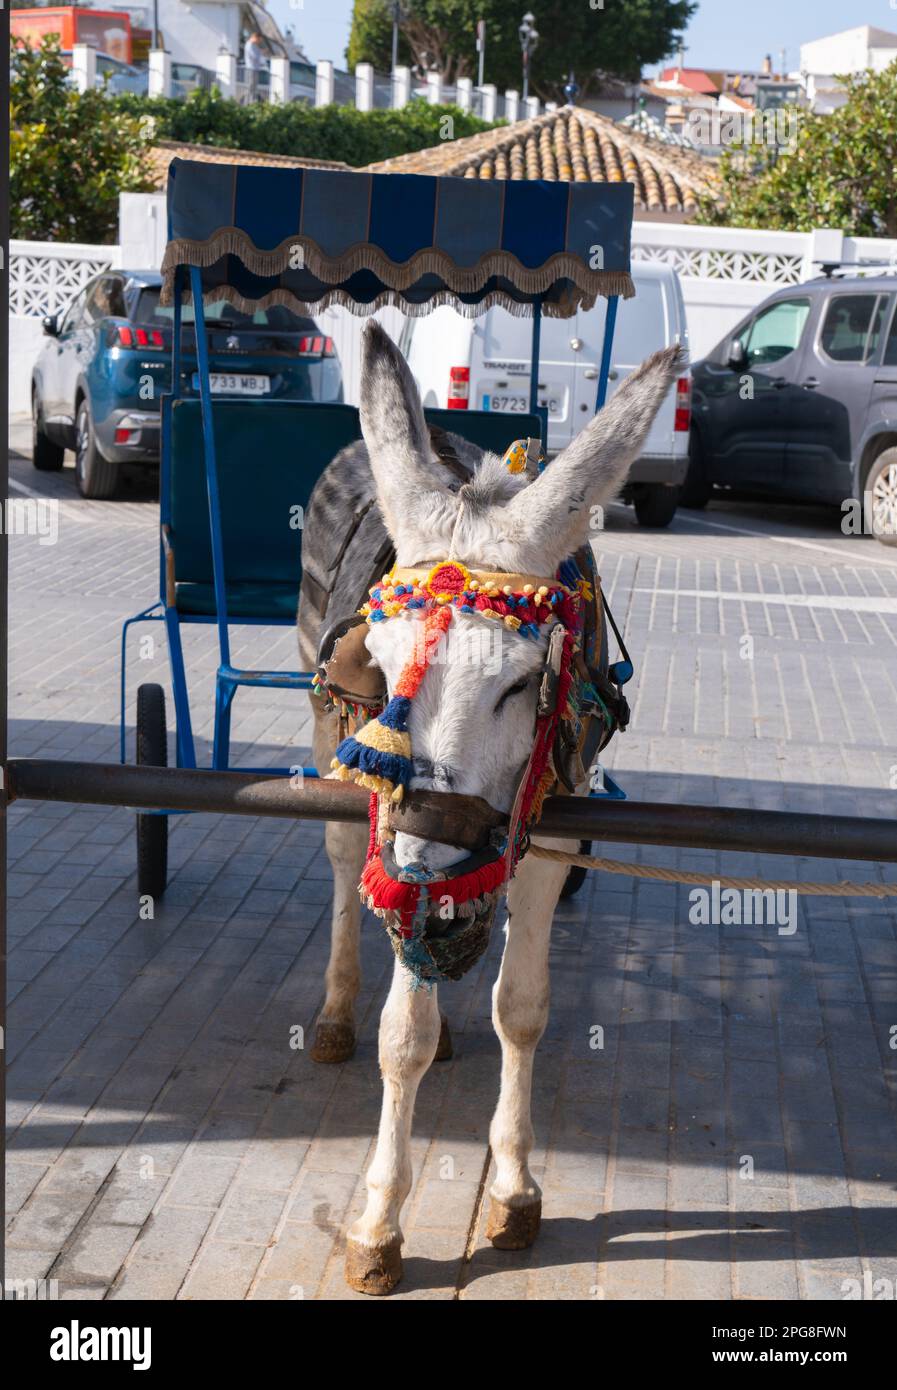 Donkey taxi in historic Spanish white village of Mijas Pueblo, Spain Stock Photo